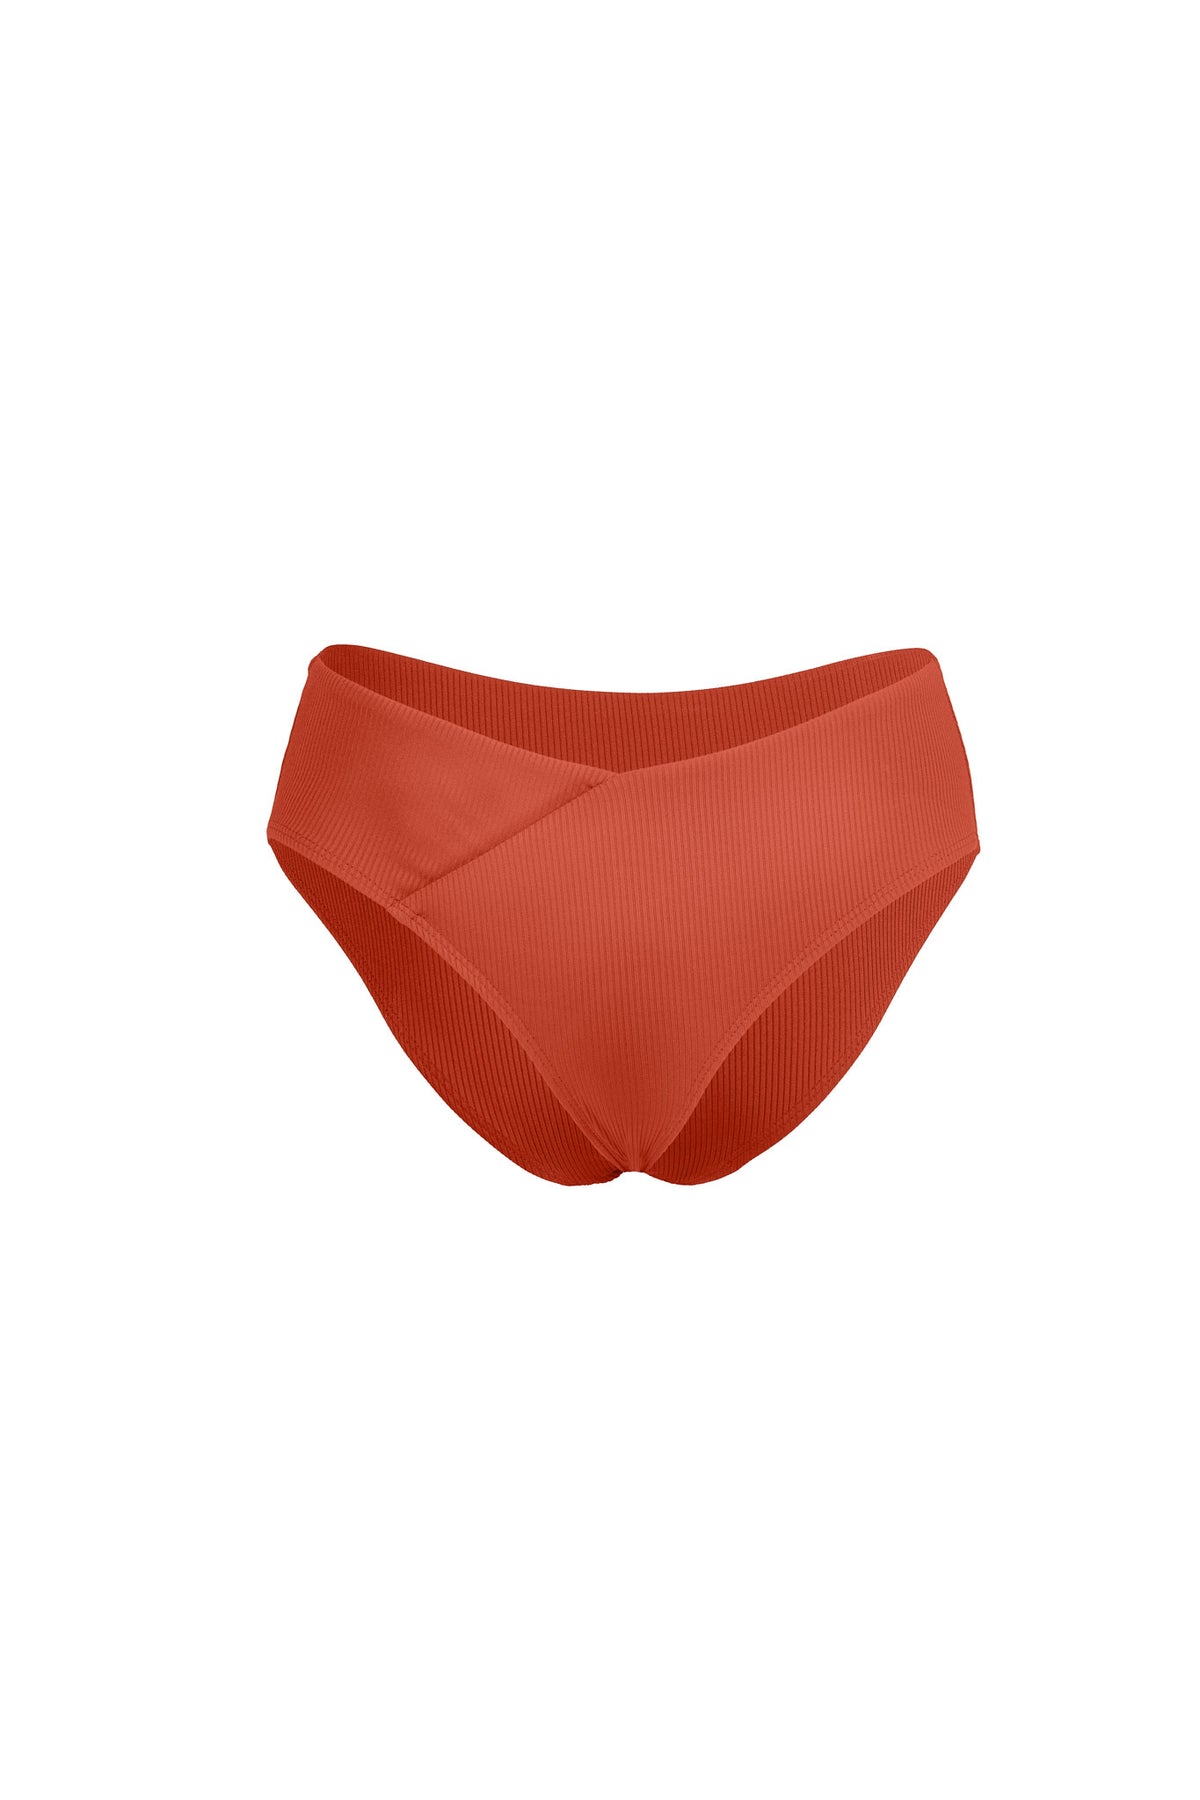 Hybrid Bikini Bottom - chili red